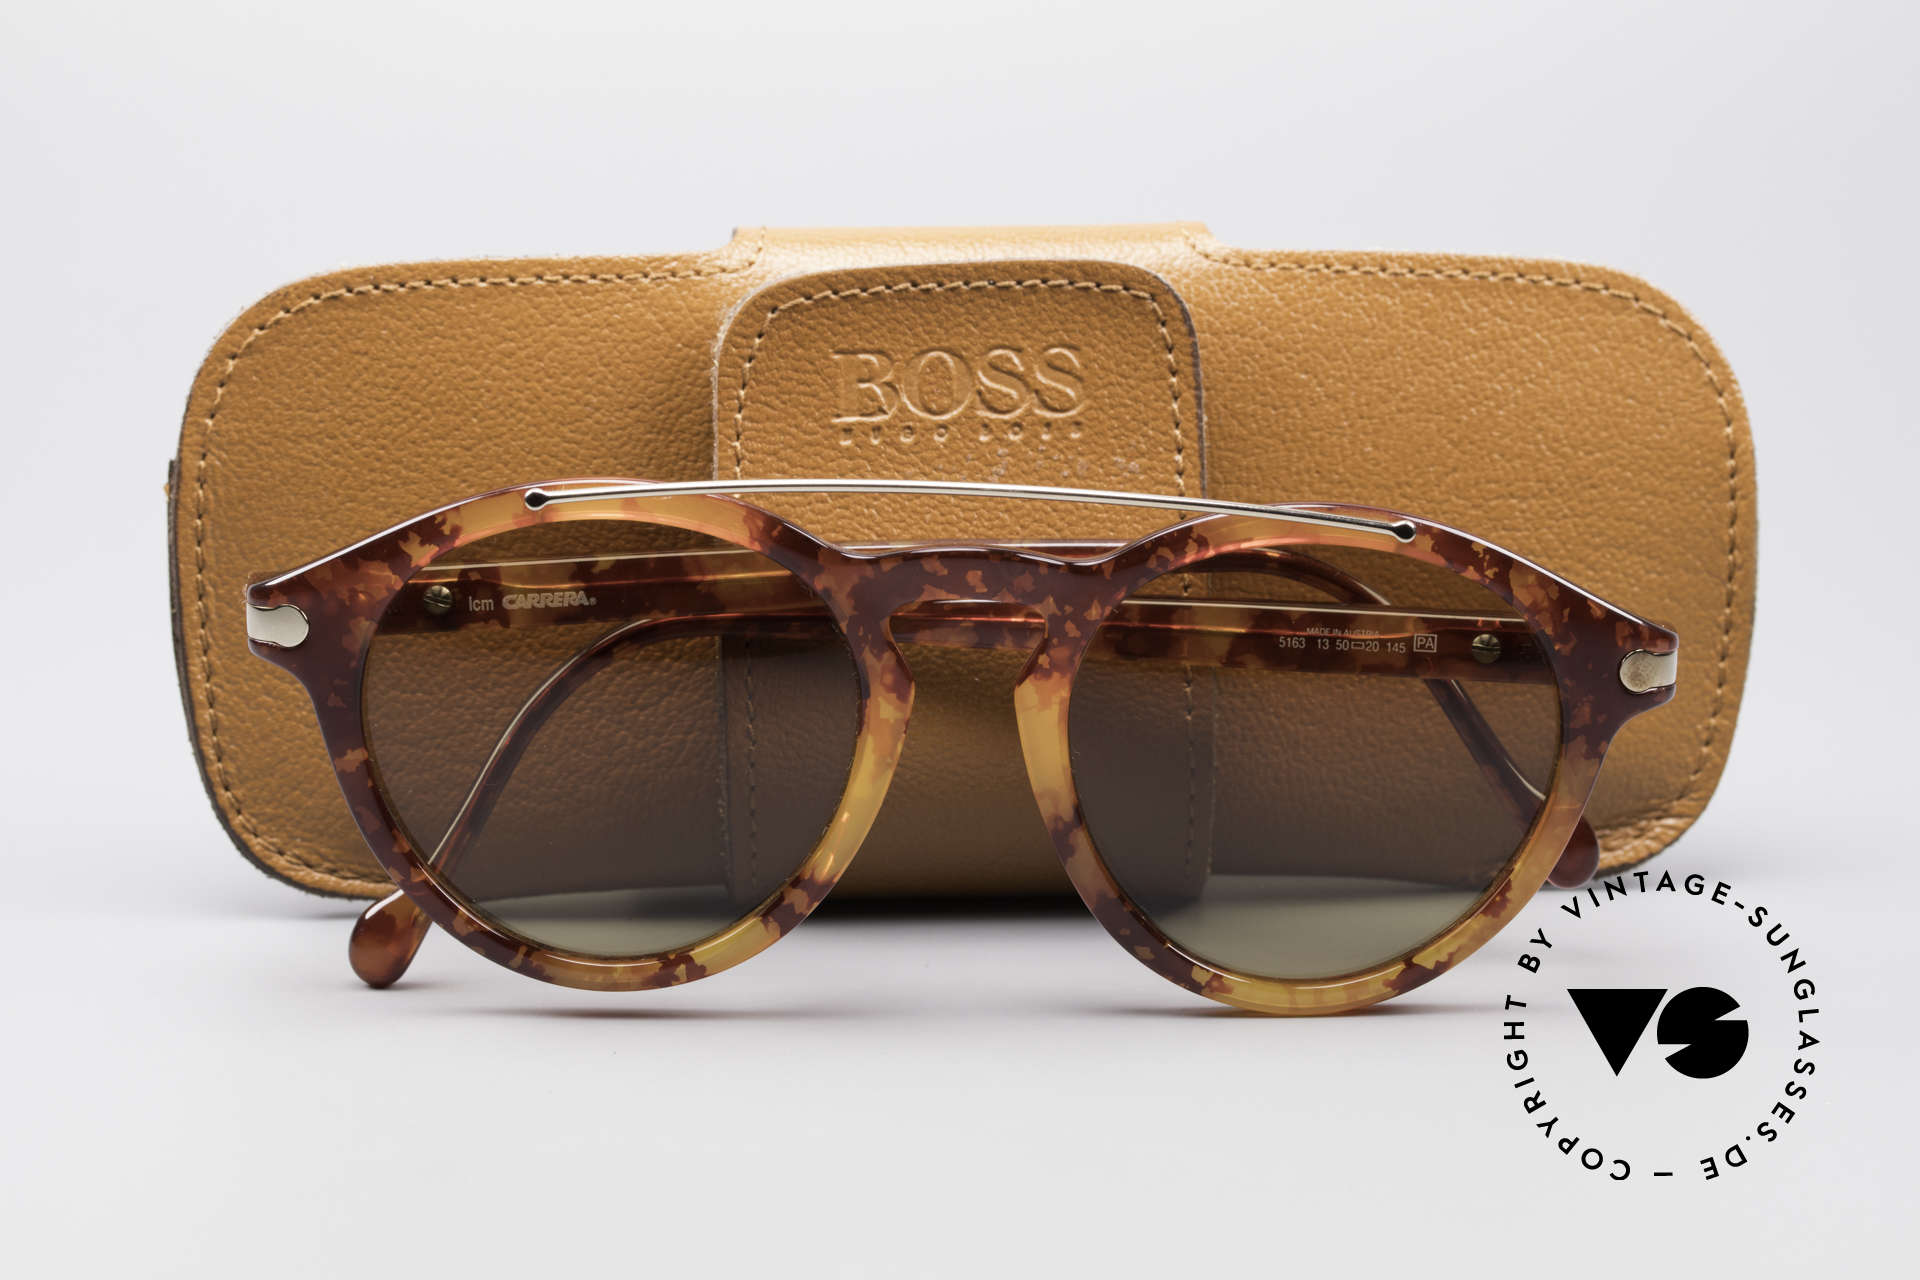 Sunglasses Boss 5163 Big Panto 90s Sunglasses 